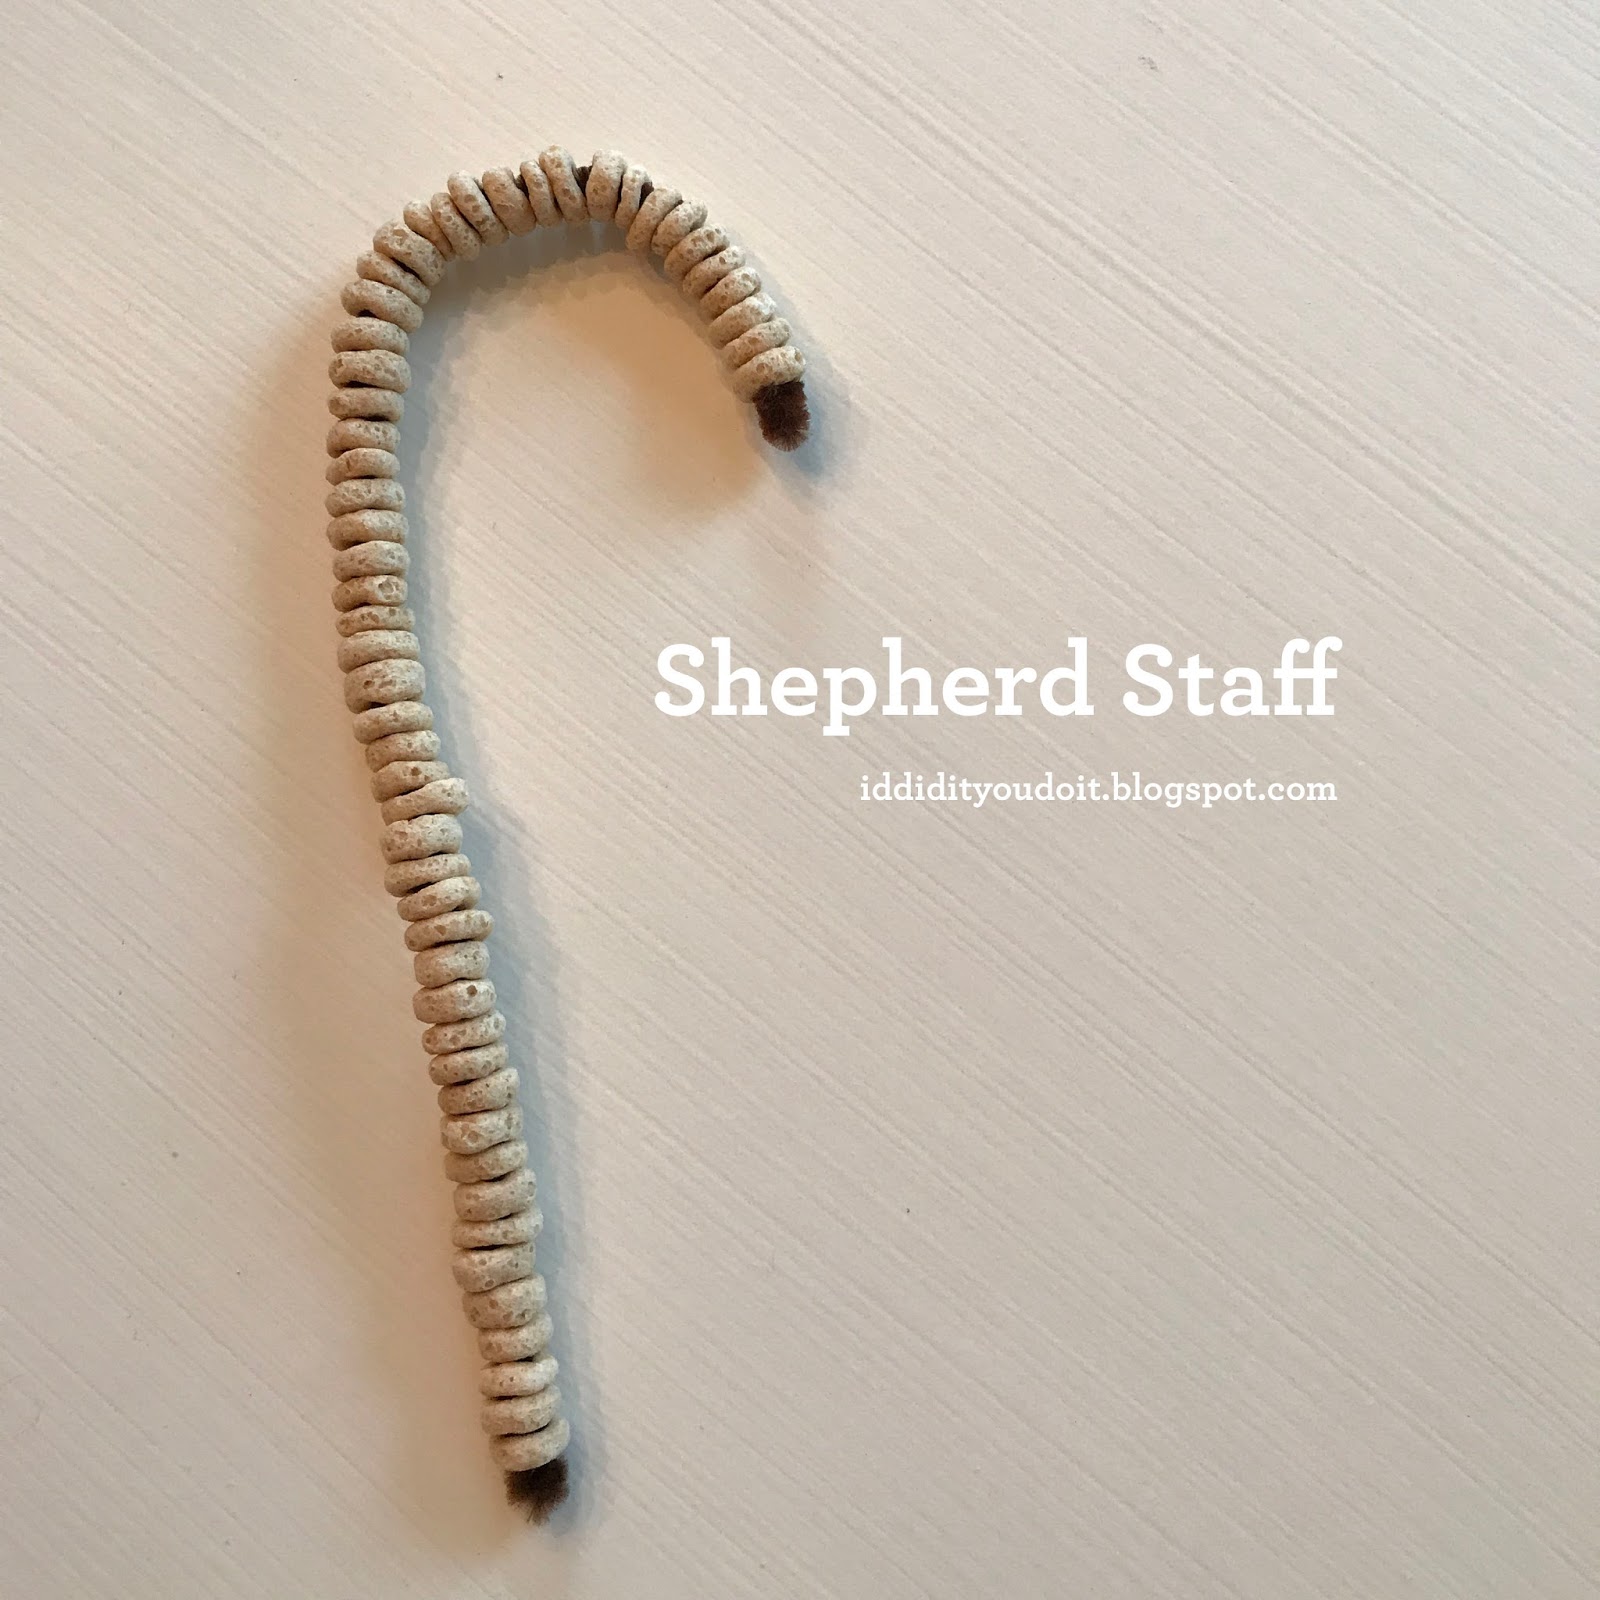 Shepherd's Staff User Manual